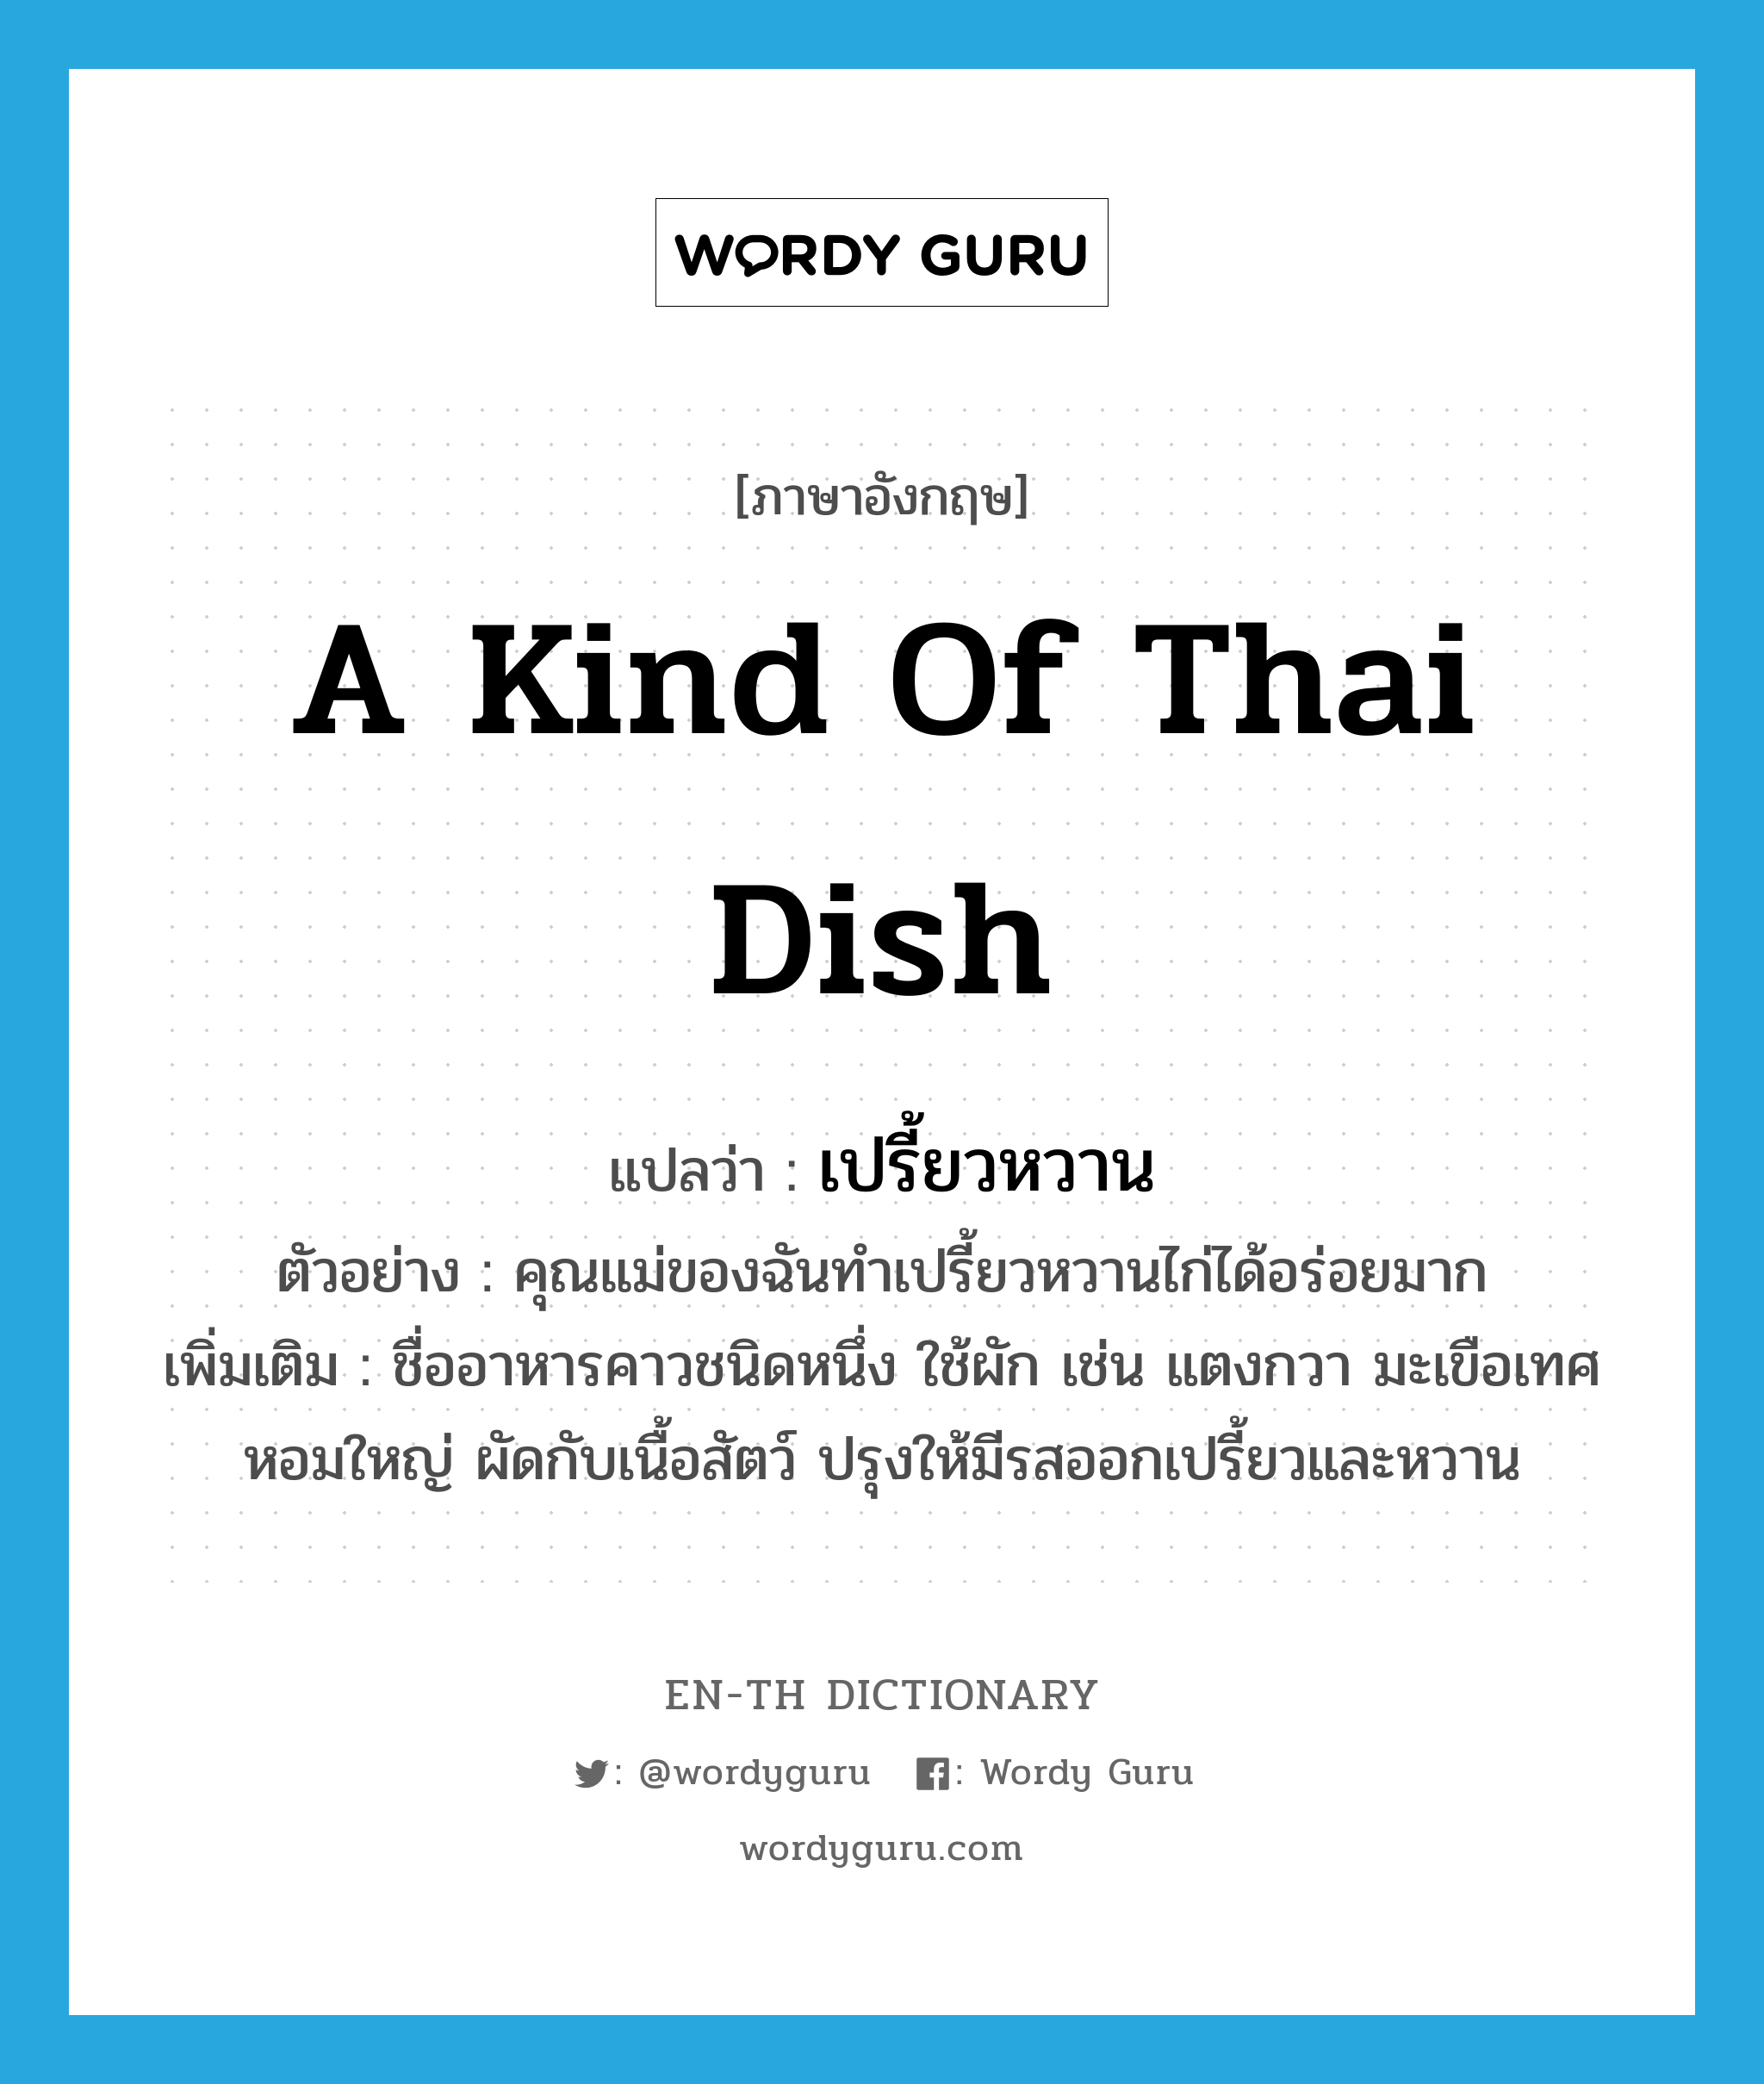 a kind of Thai dish แปลว่า? คำศัพท์ในกลุ่มประเภท N, คำศัพท์ภาษาอังกฤษ a kind of Thai dish แปลว่า เปรี้ยวหวาน ประเภท N ตัวอย่าง คุณแม่ของฉันทำเปรี้ยวหวานไก่ได้อร่อยมาก เพิ่มเติม ชื่ออาหารคาวชนิดหนึ่ง ใช้ผัก เช่น แตงกวา มะเขือเทศ หอมใหญ่ ผัดกับเนื้อสัตว์ ปรุงให้มีรสออกเปรี้ยวและหวาน หมวด N